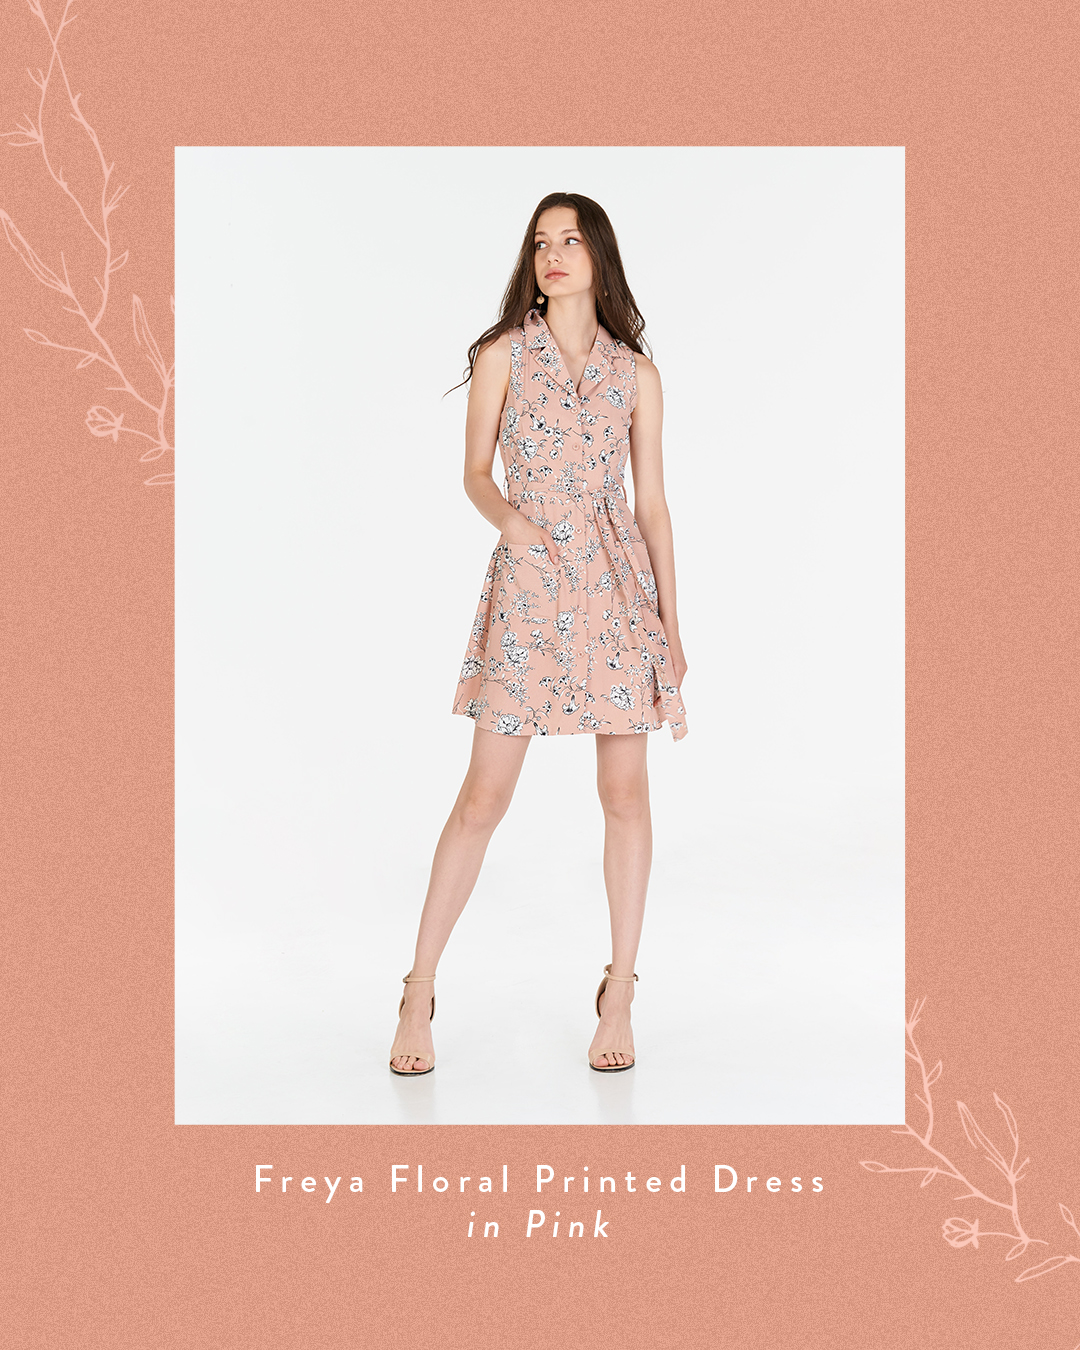 Freya Floral Printed Dress